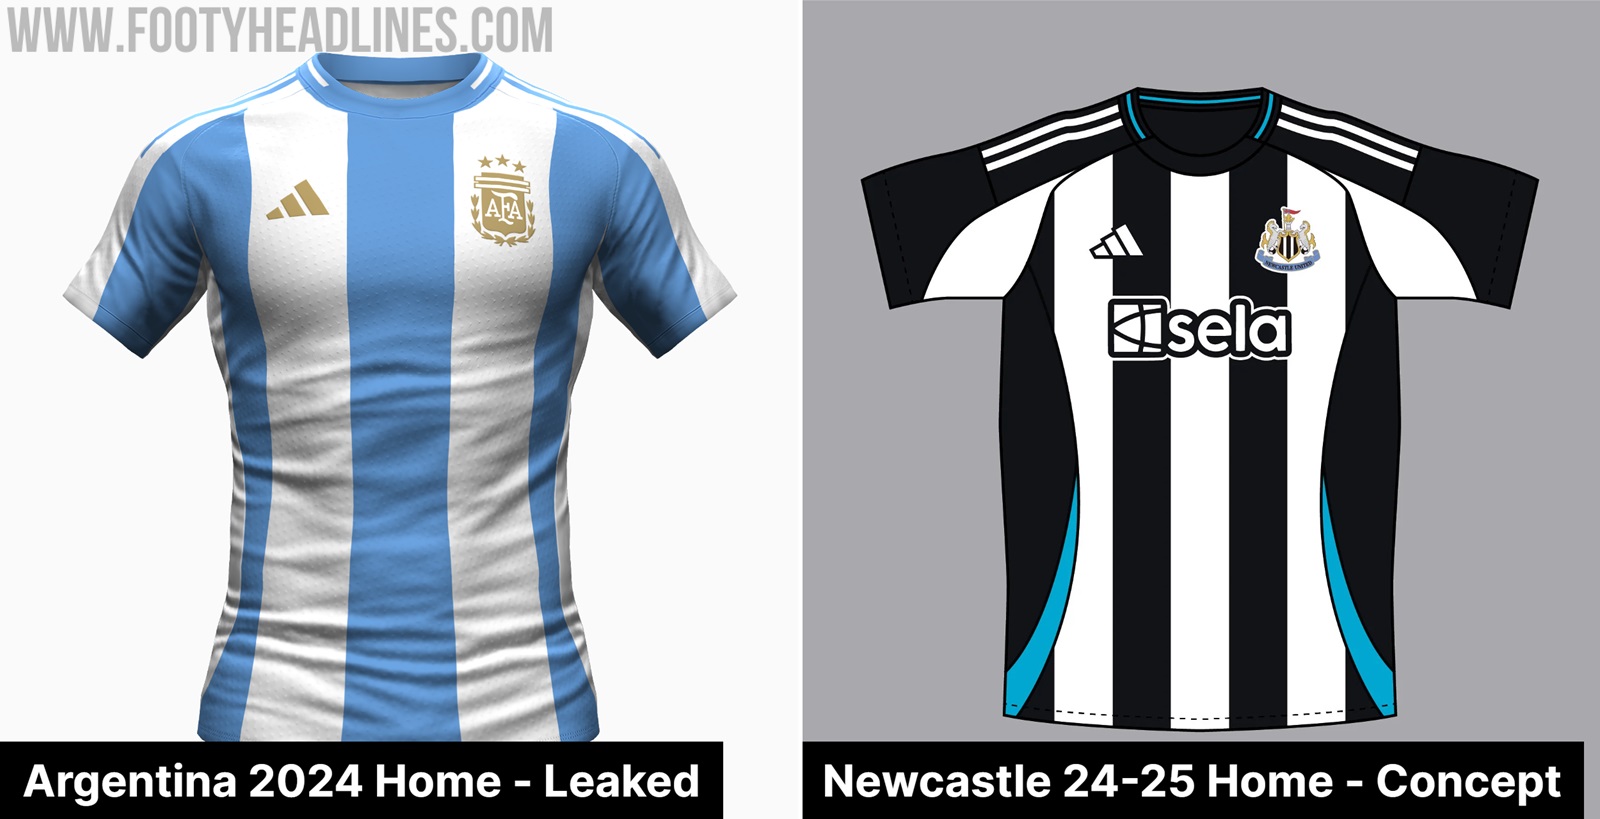 Adidas Newcastle United 24-25 Concept Kits - No More Castore - Based on  Leaked Adidas 2024 National Team Kits - Footy Headlines